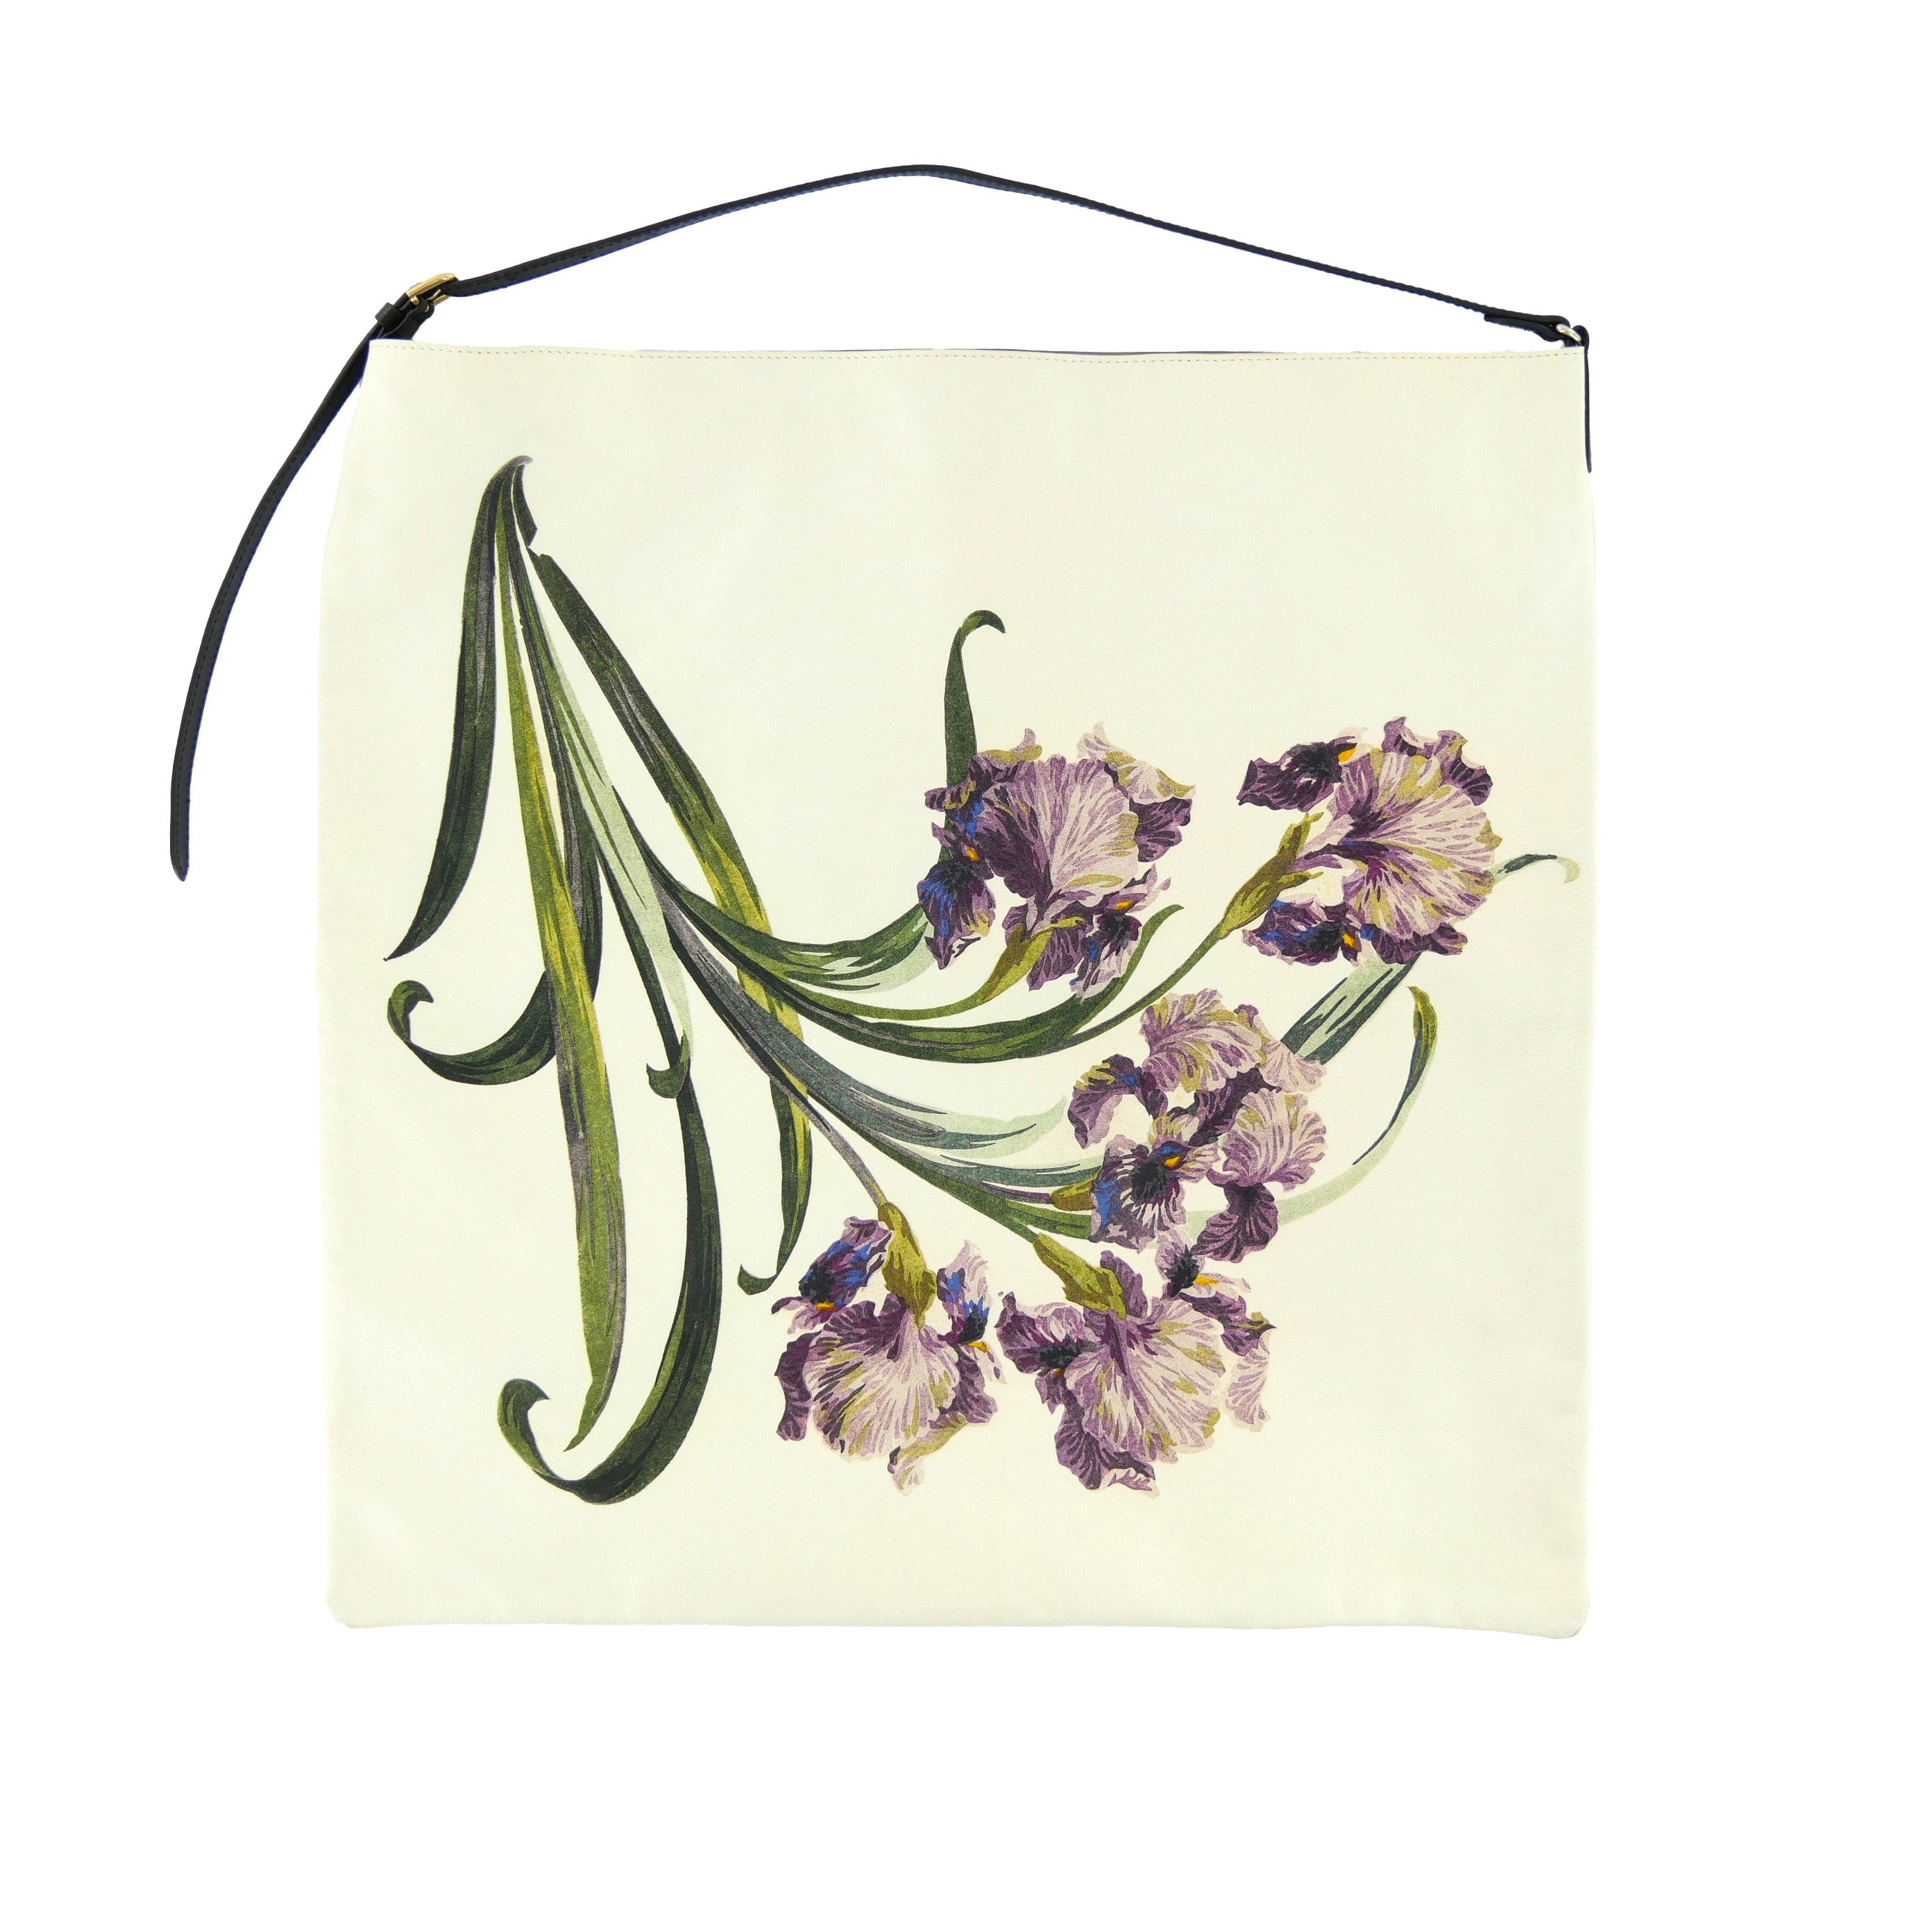 Dries Van Noten [ドリス ヴァン ノッテン] / Flower print tote bag [フラワー プリント トートバッグ]